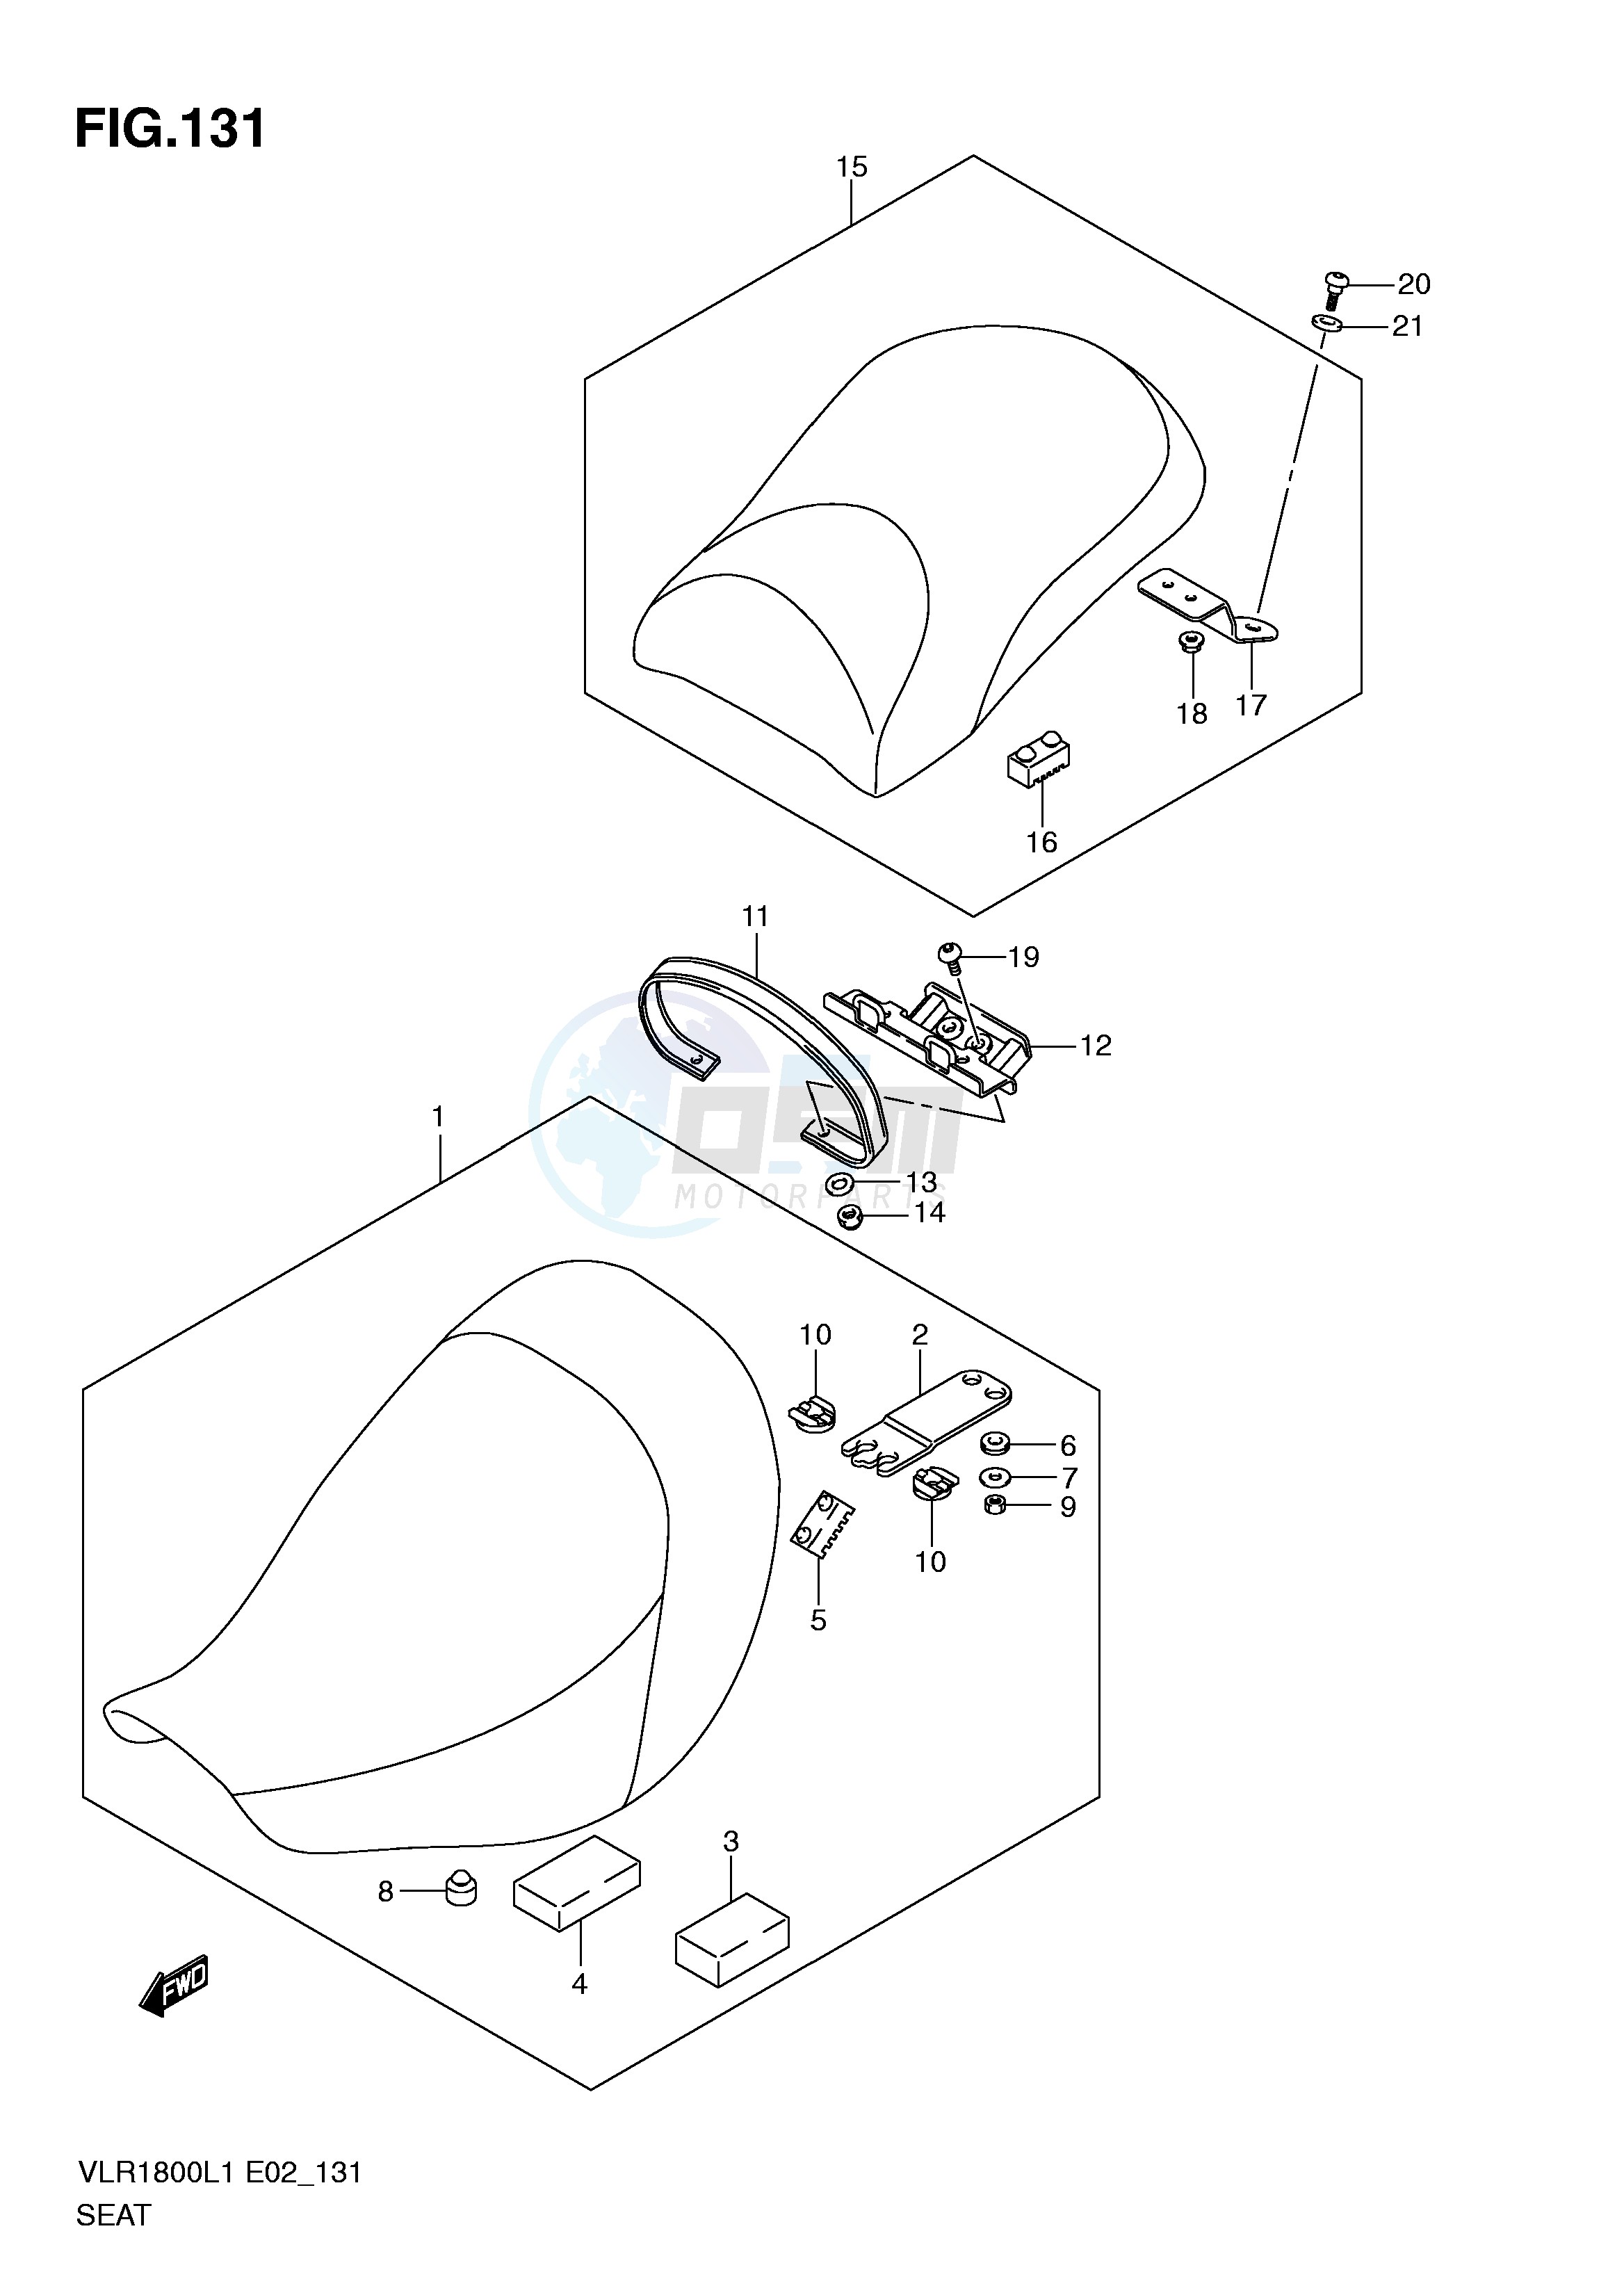 SEAT (VLR1800UFL1 E19) blueprint